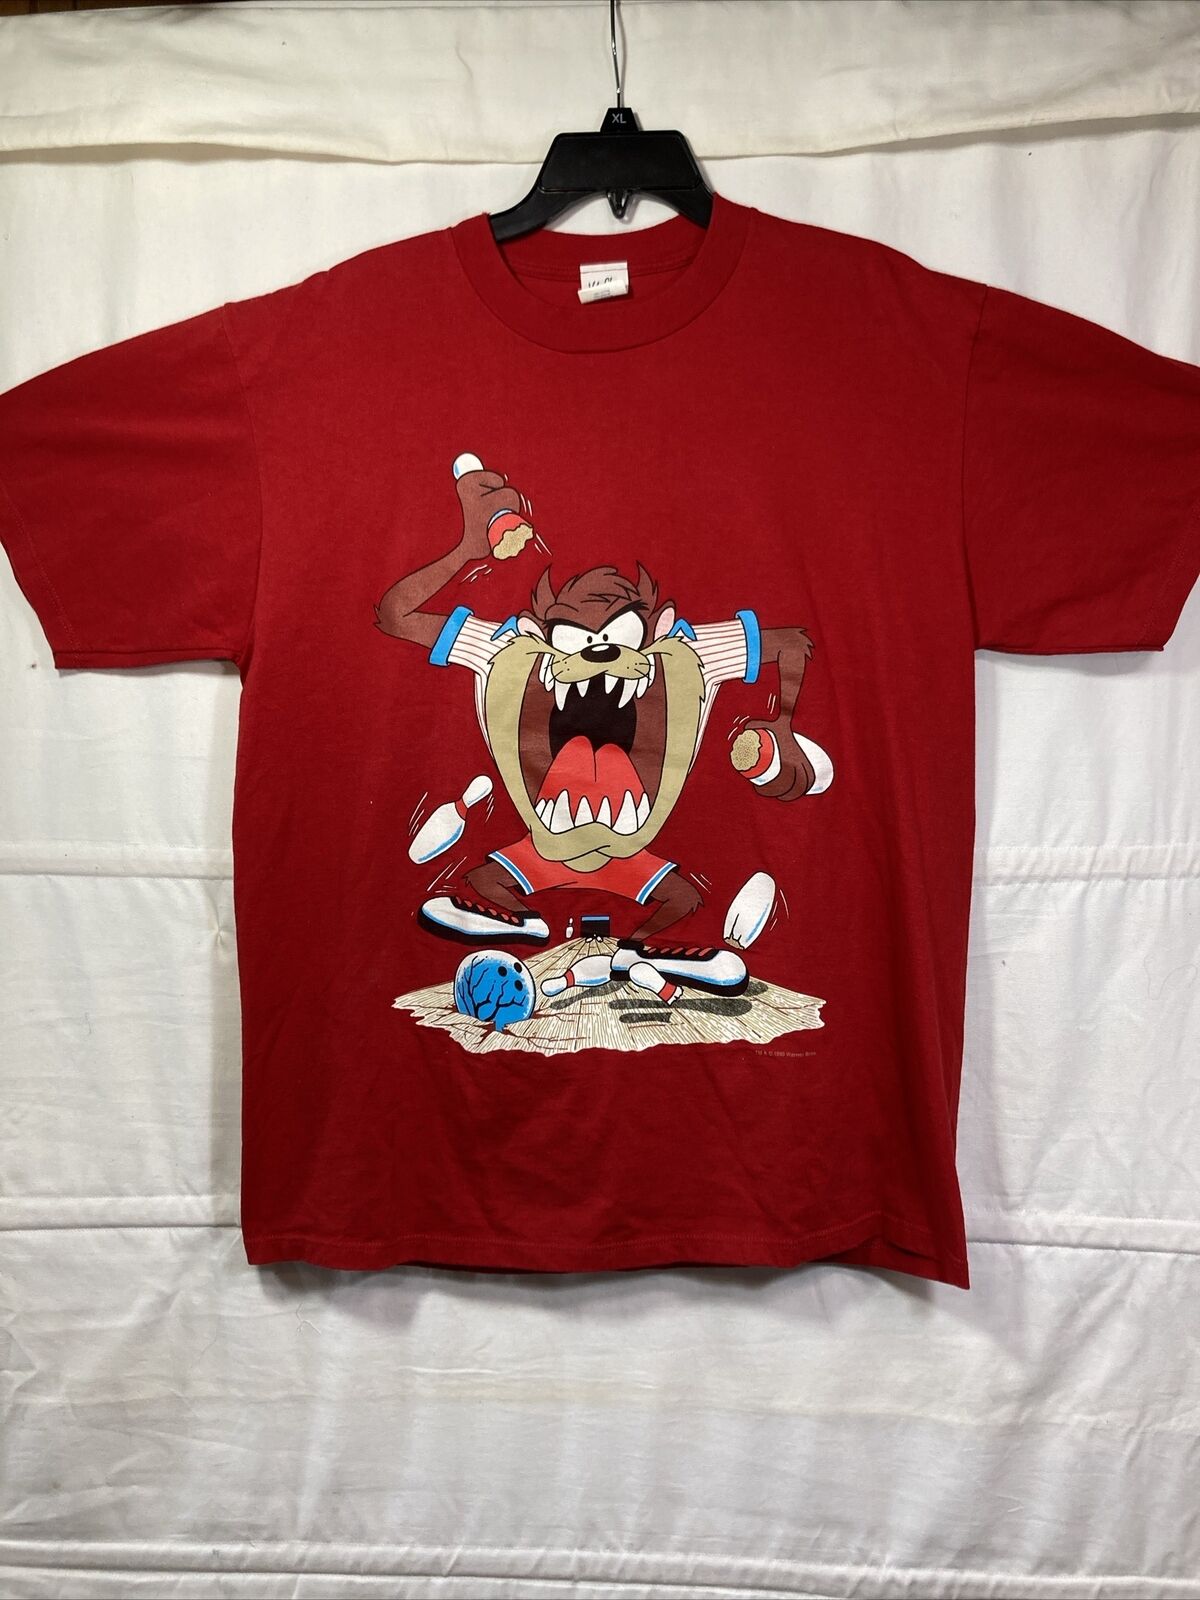 VTG NOS 1993 Tazmanian Devil Bowling T-shirt Velva Sheen USA Size XL Large NWOT